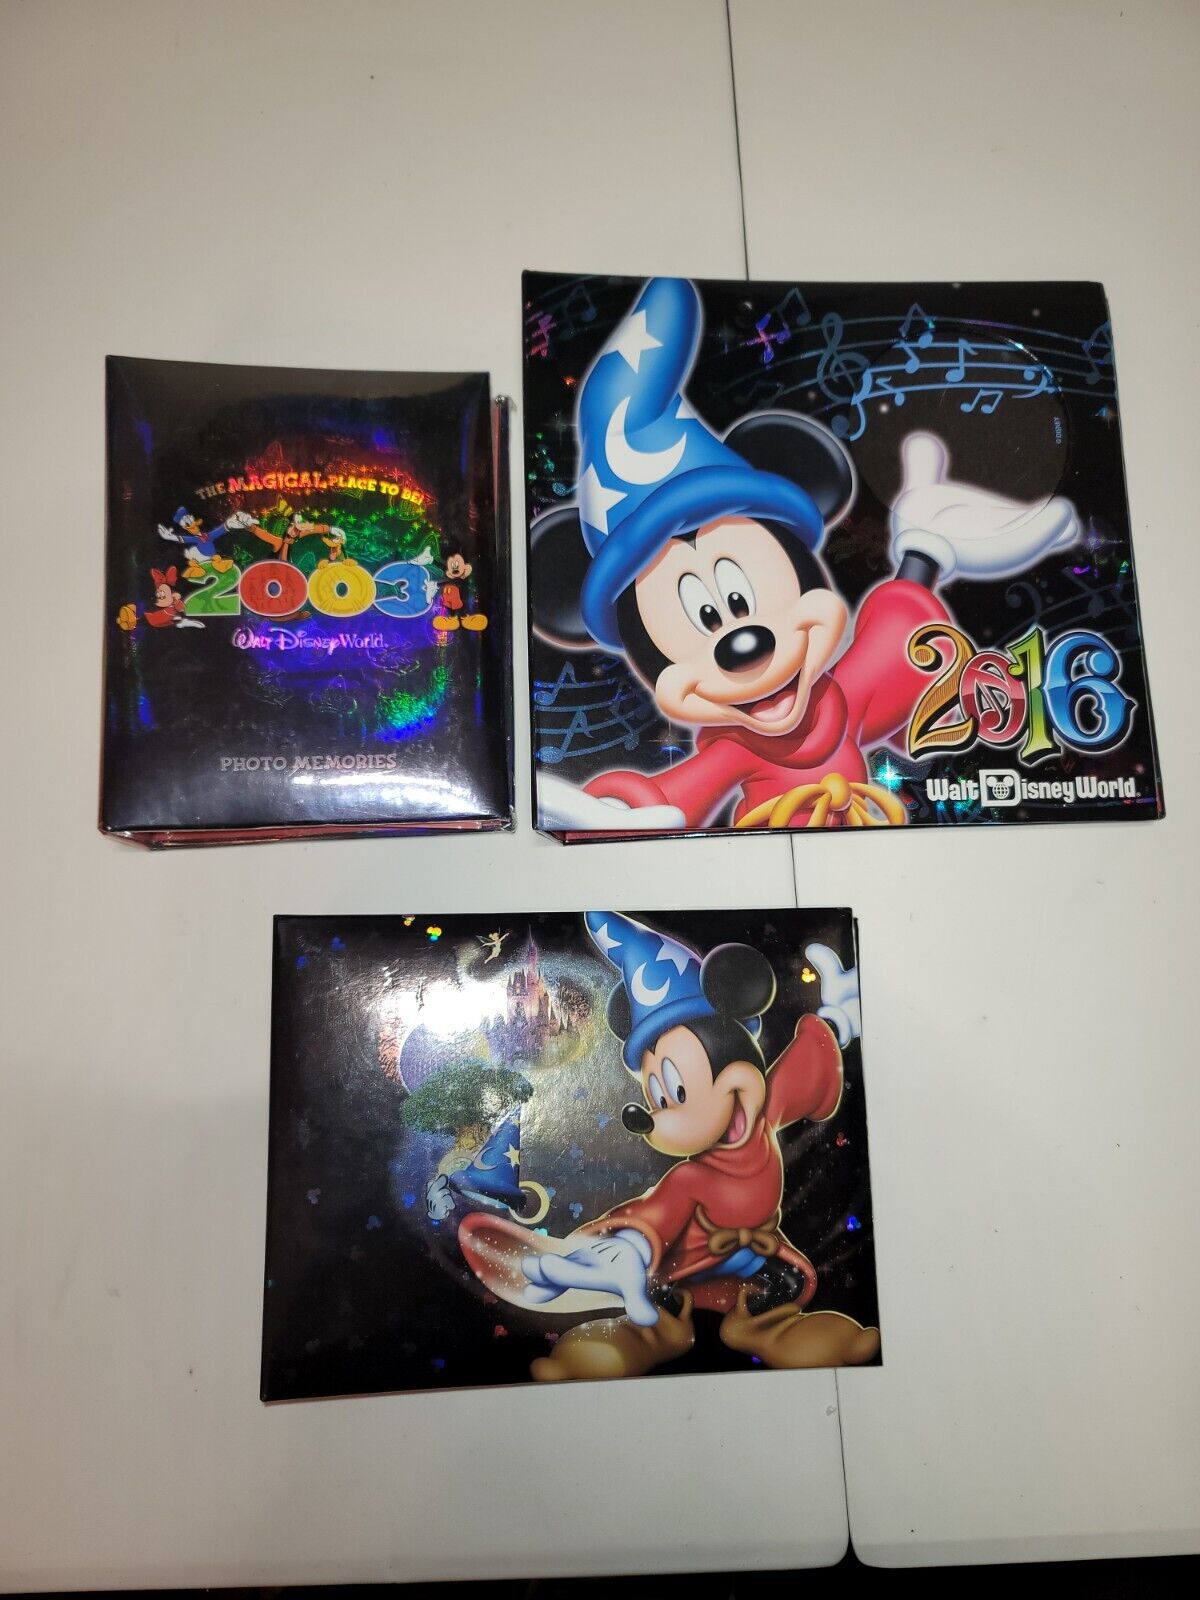 Lot of 3 Disney World Theme Park Photo Albums Book 2003, 2016, 4 Parks 1 World.